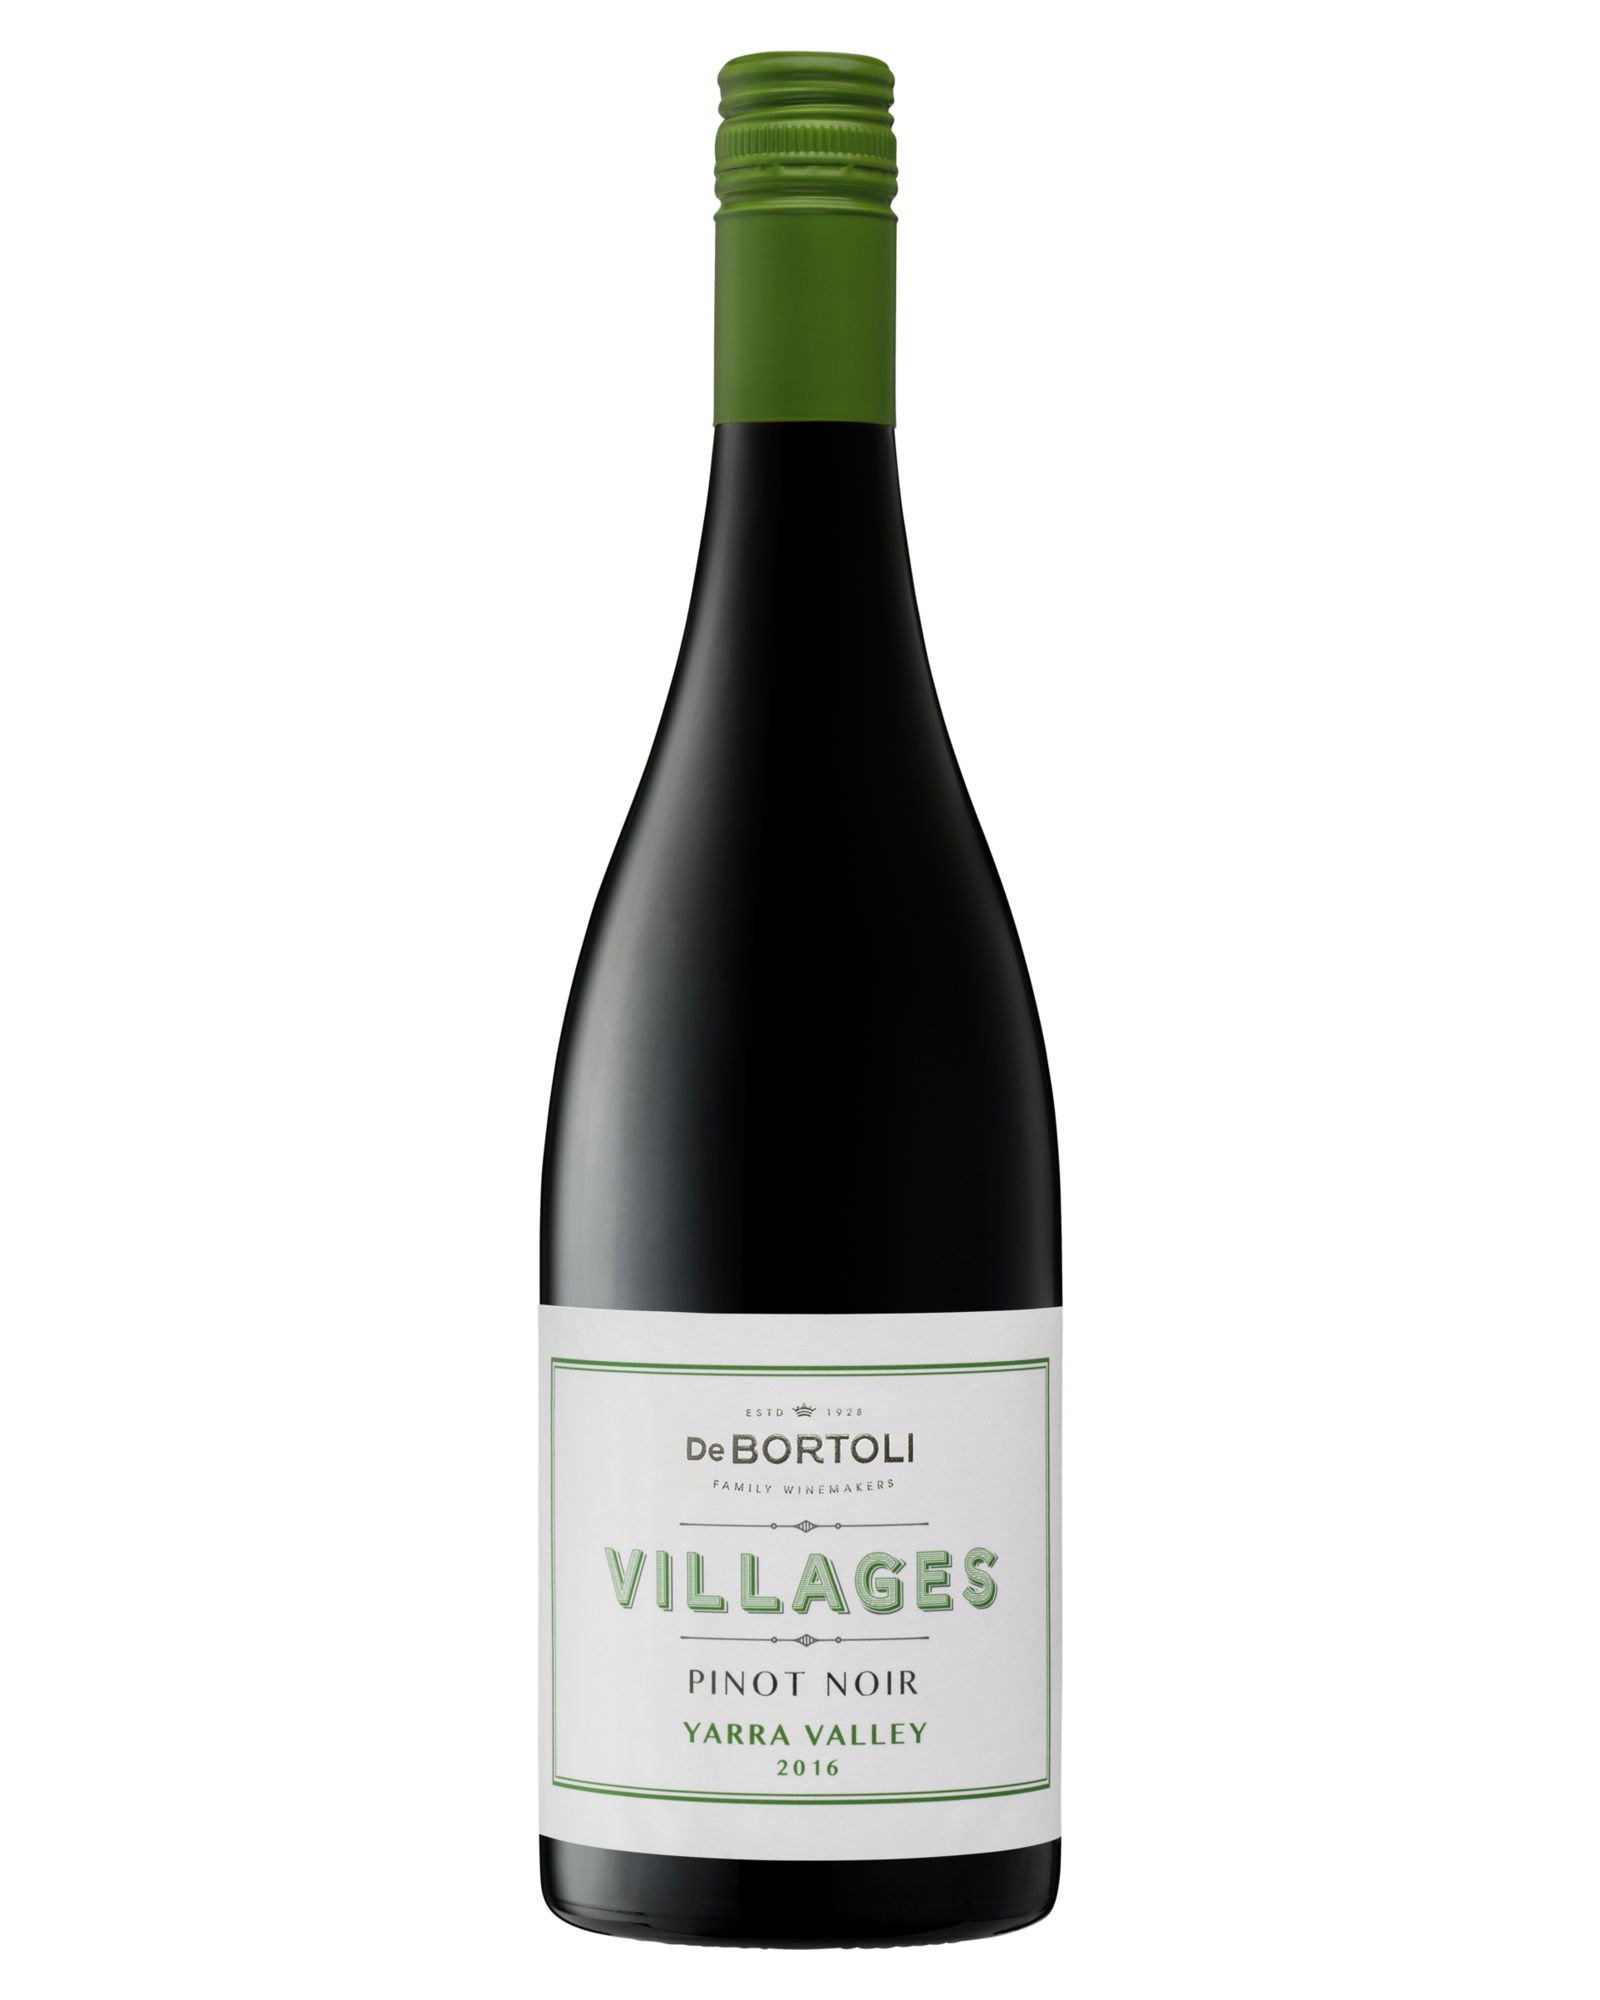 De Bortoli Villages Yarra Valley Pinot Noir